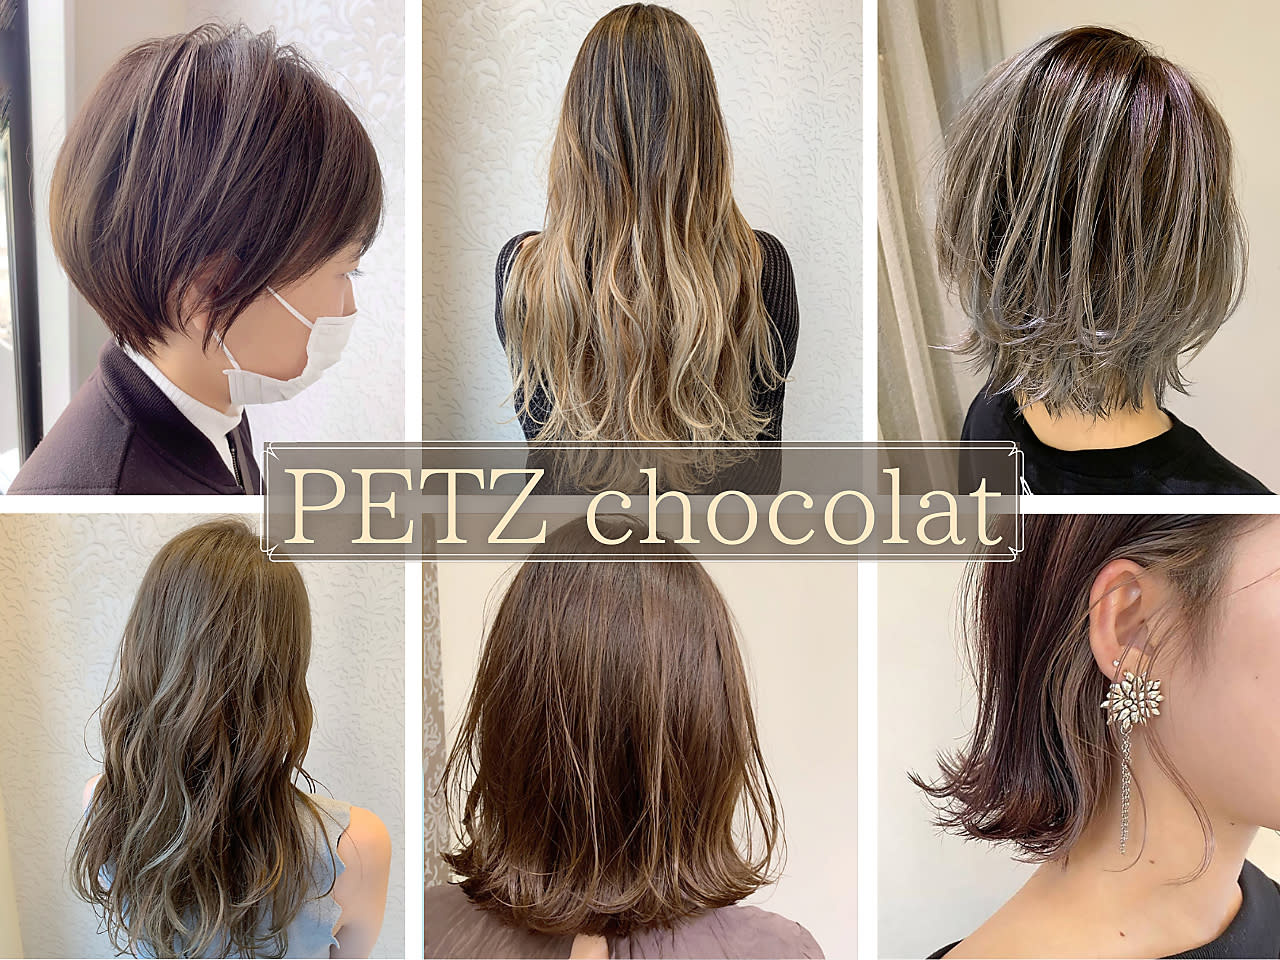 PETZ chocolatのアイキャッチ画像